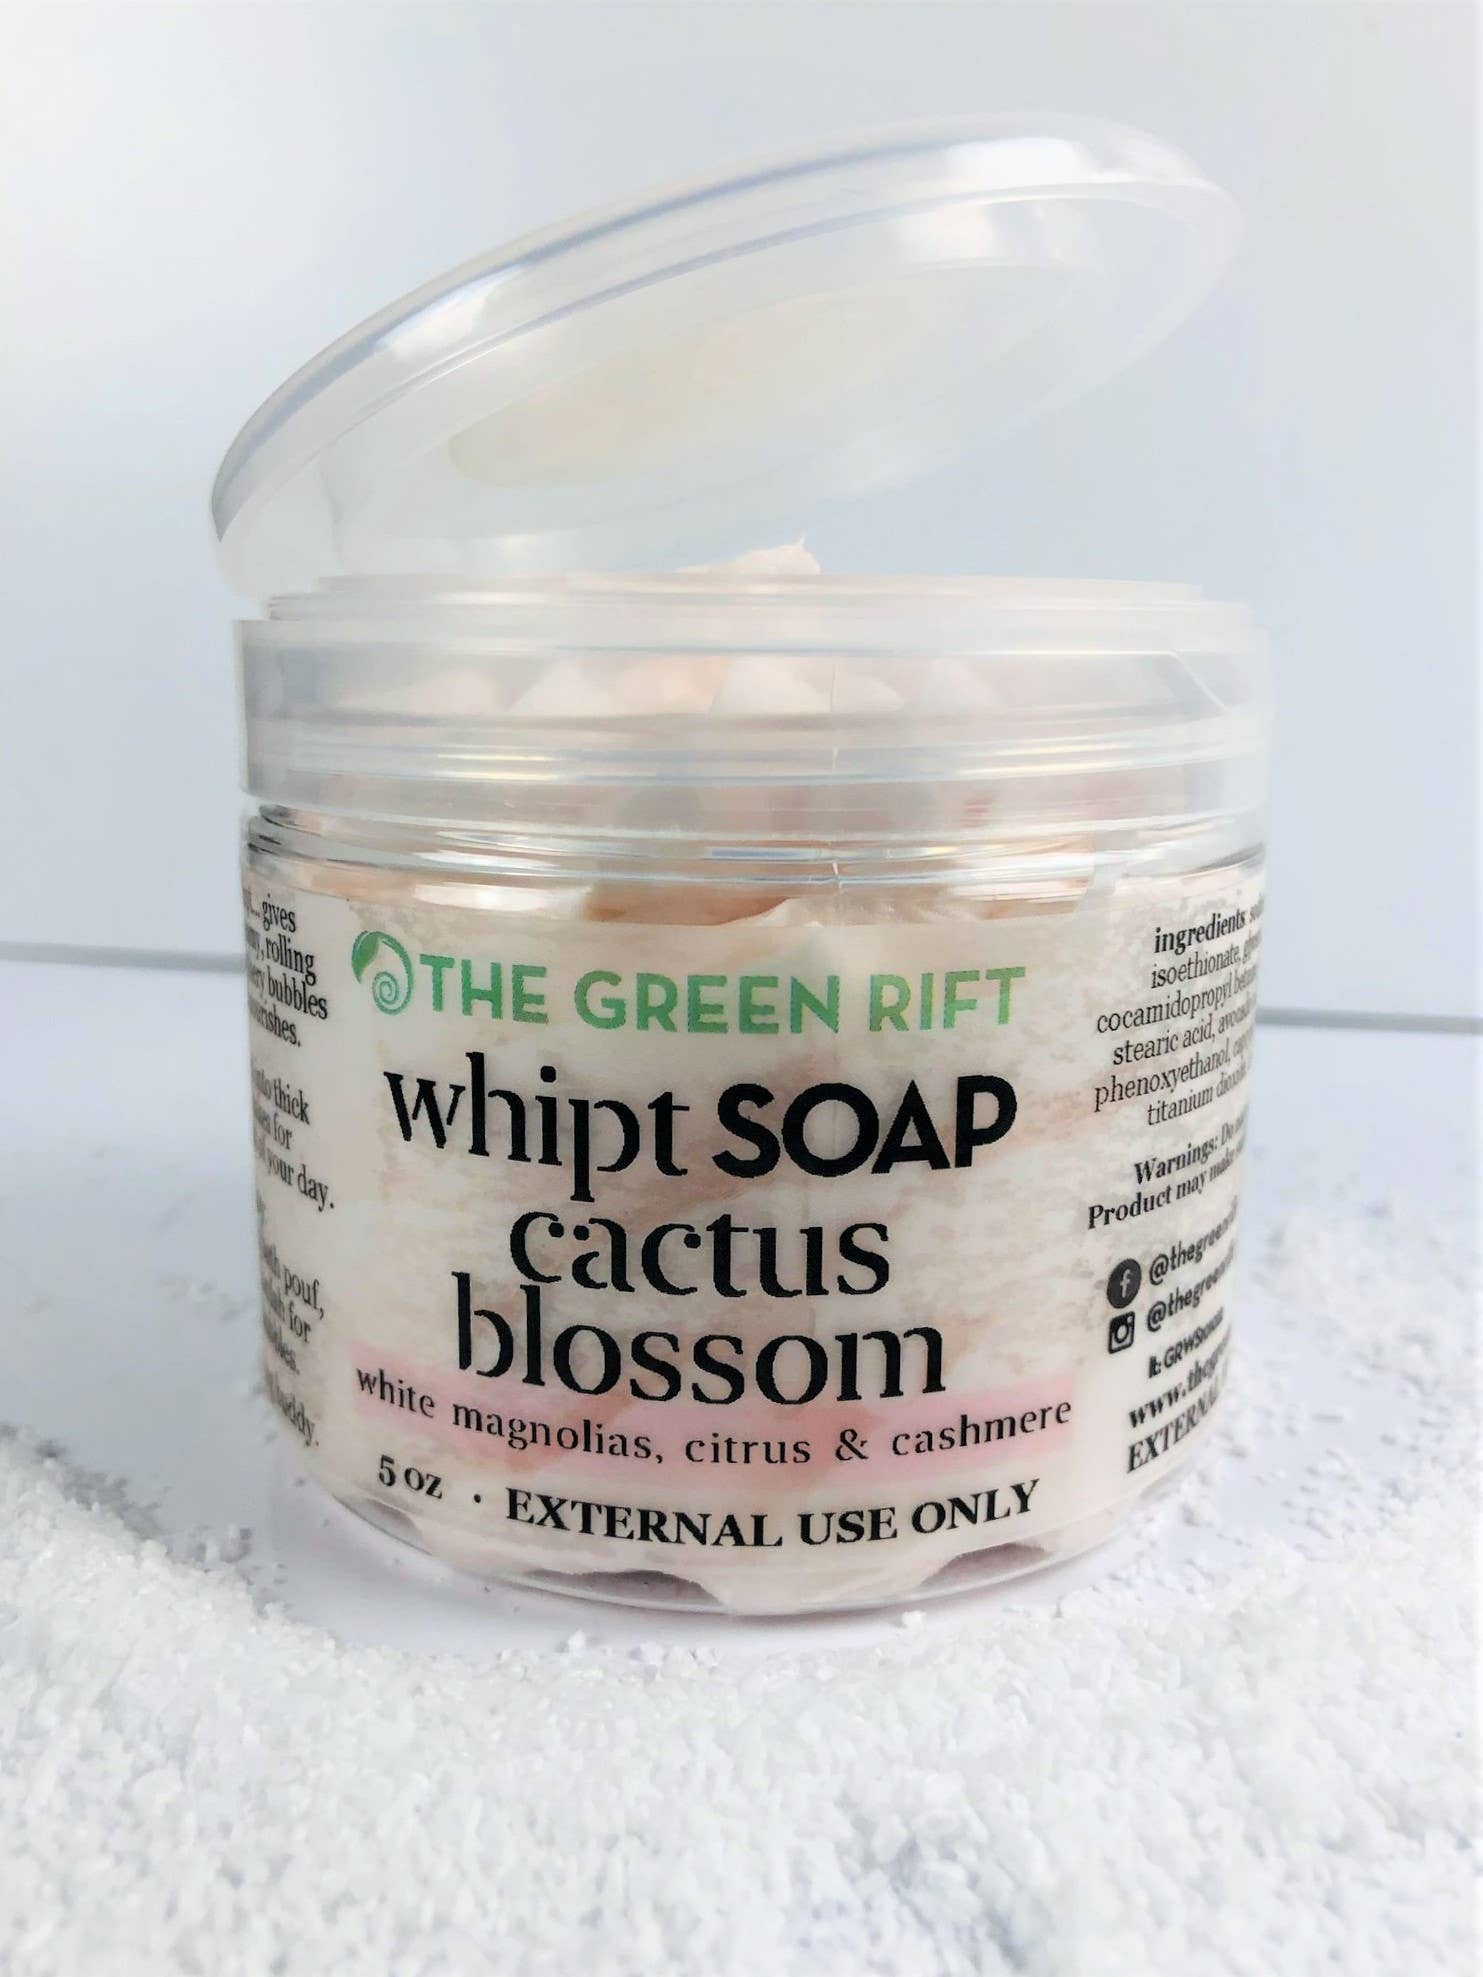 The Green Rift - Cactus Blossom Whipt Soap: 5 oz